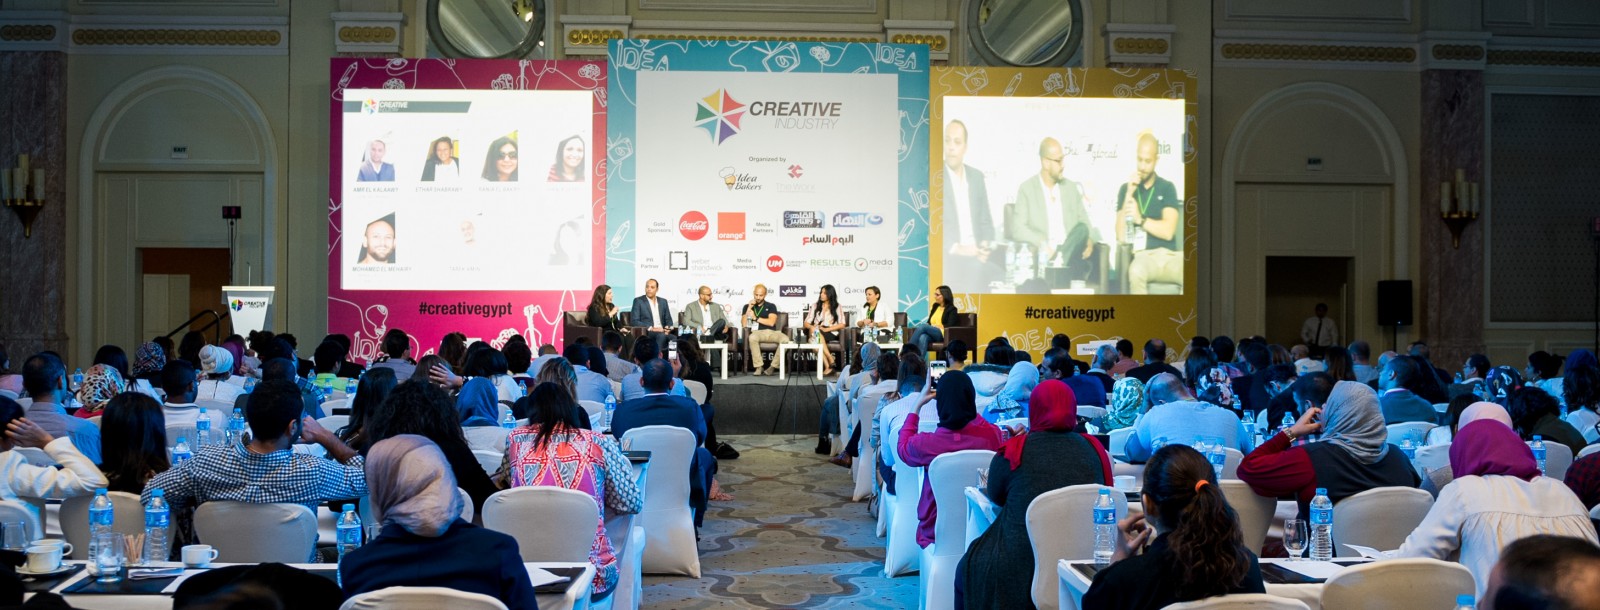 Creative Industry Summit 2016 Activities